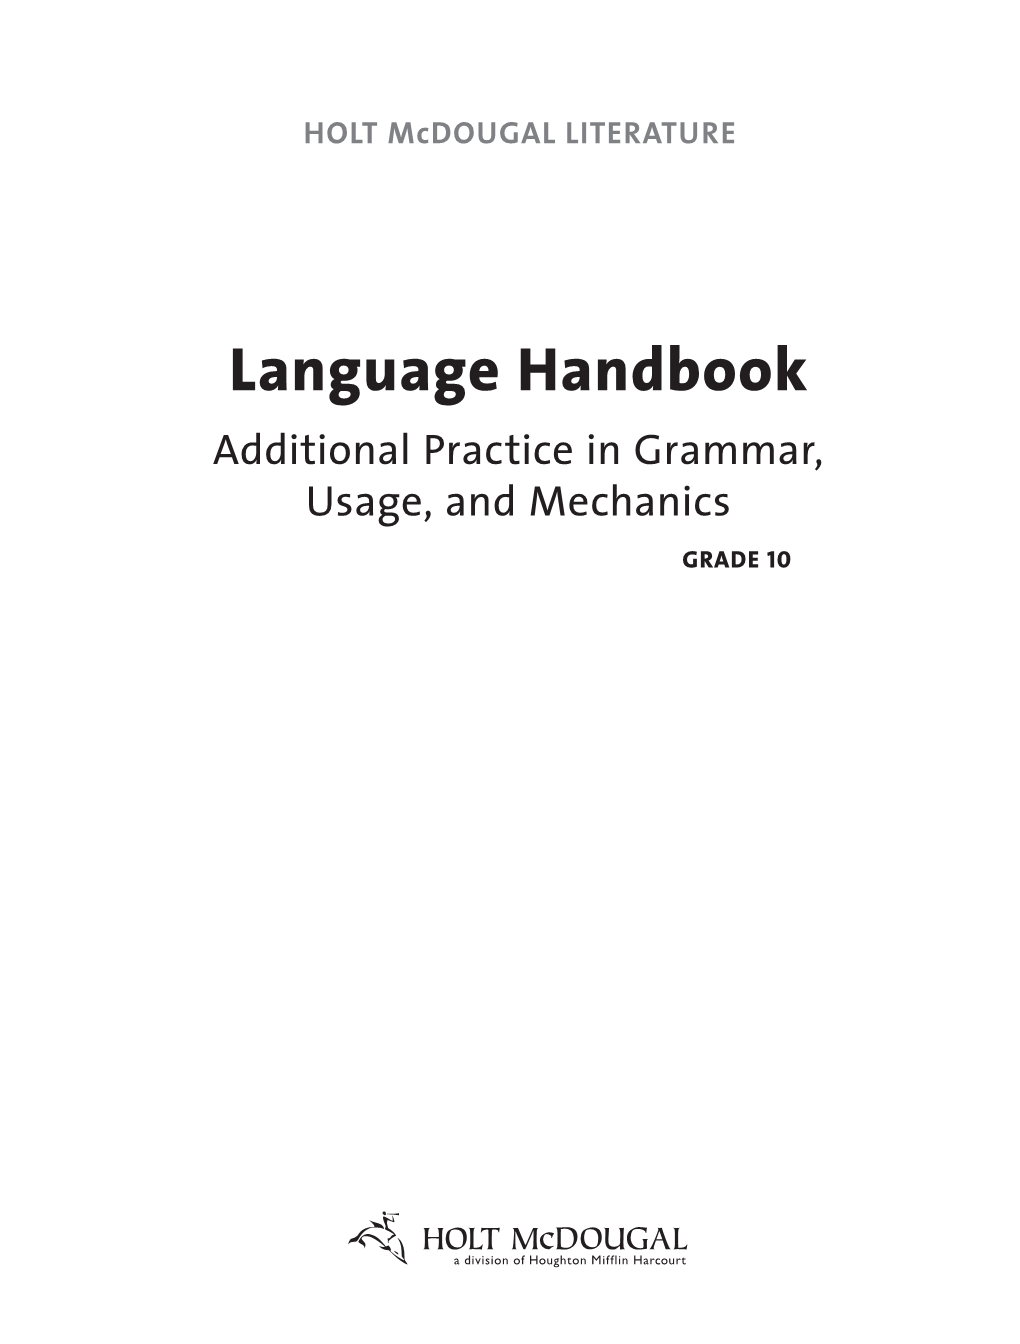 Language Handbook Additional Practice in Grammar, Usage, and Mechanics GRADE 10